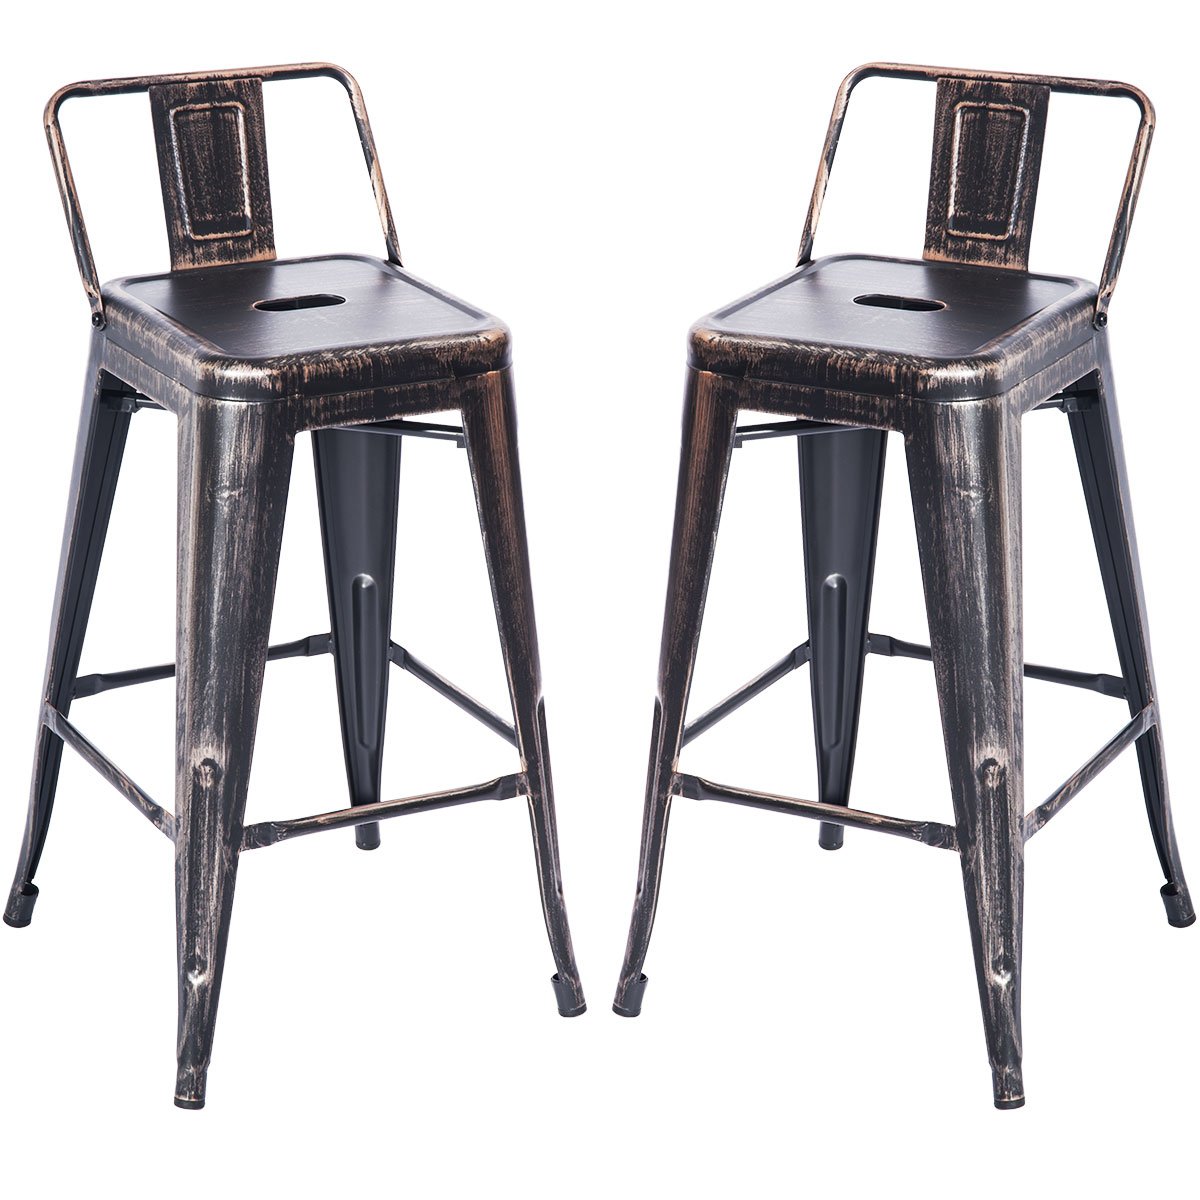 Low Back Indoor and Outdoor Metal Chair Bar-stool Set of 2 (Golden Black)